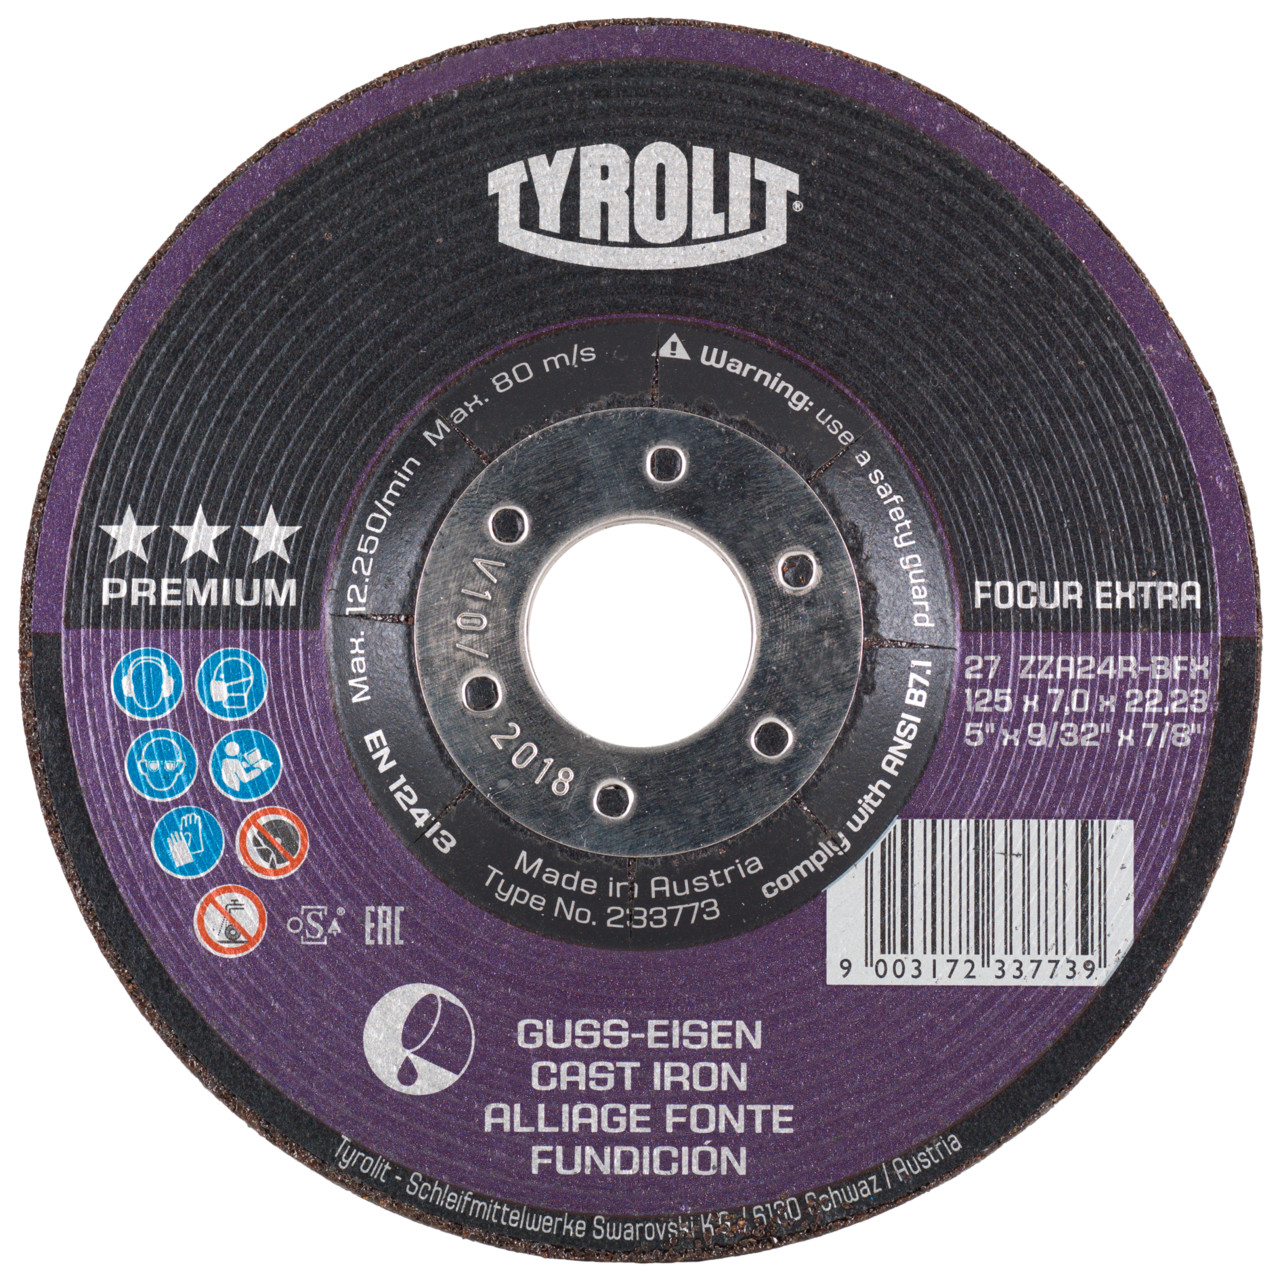 Tyrolit Roughing disc DxUxH 230x7x22.23 FOCUR Extra for cast iron, shape: 27 - offset version, Art. 233778